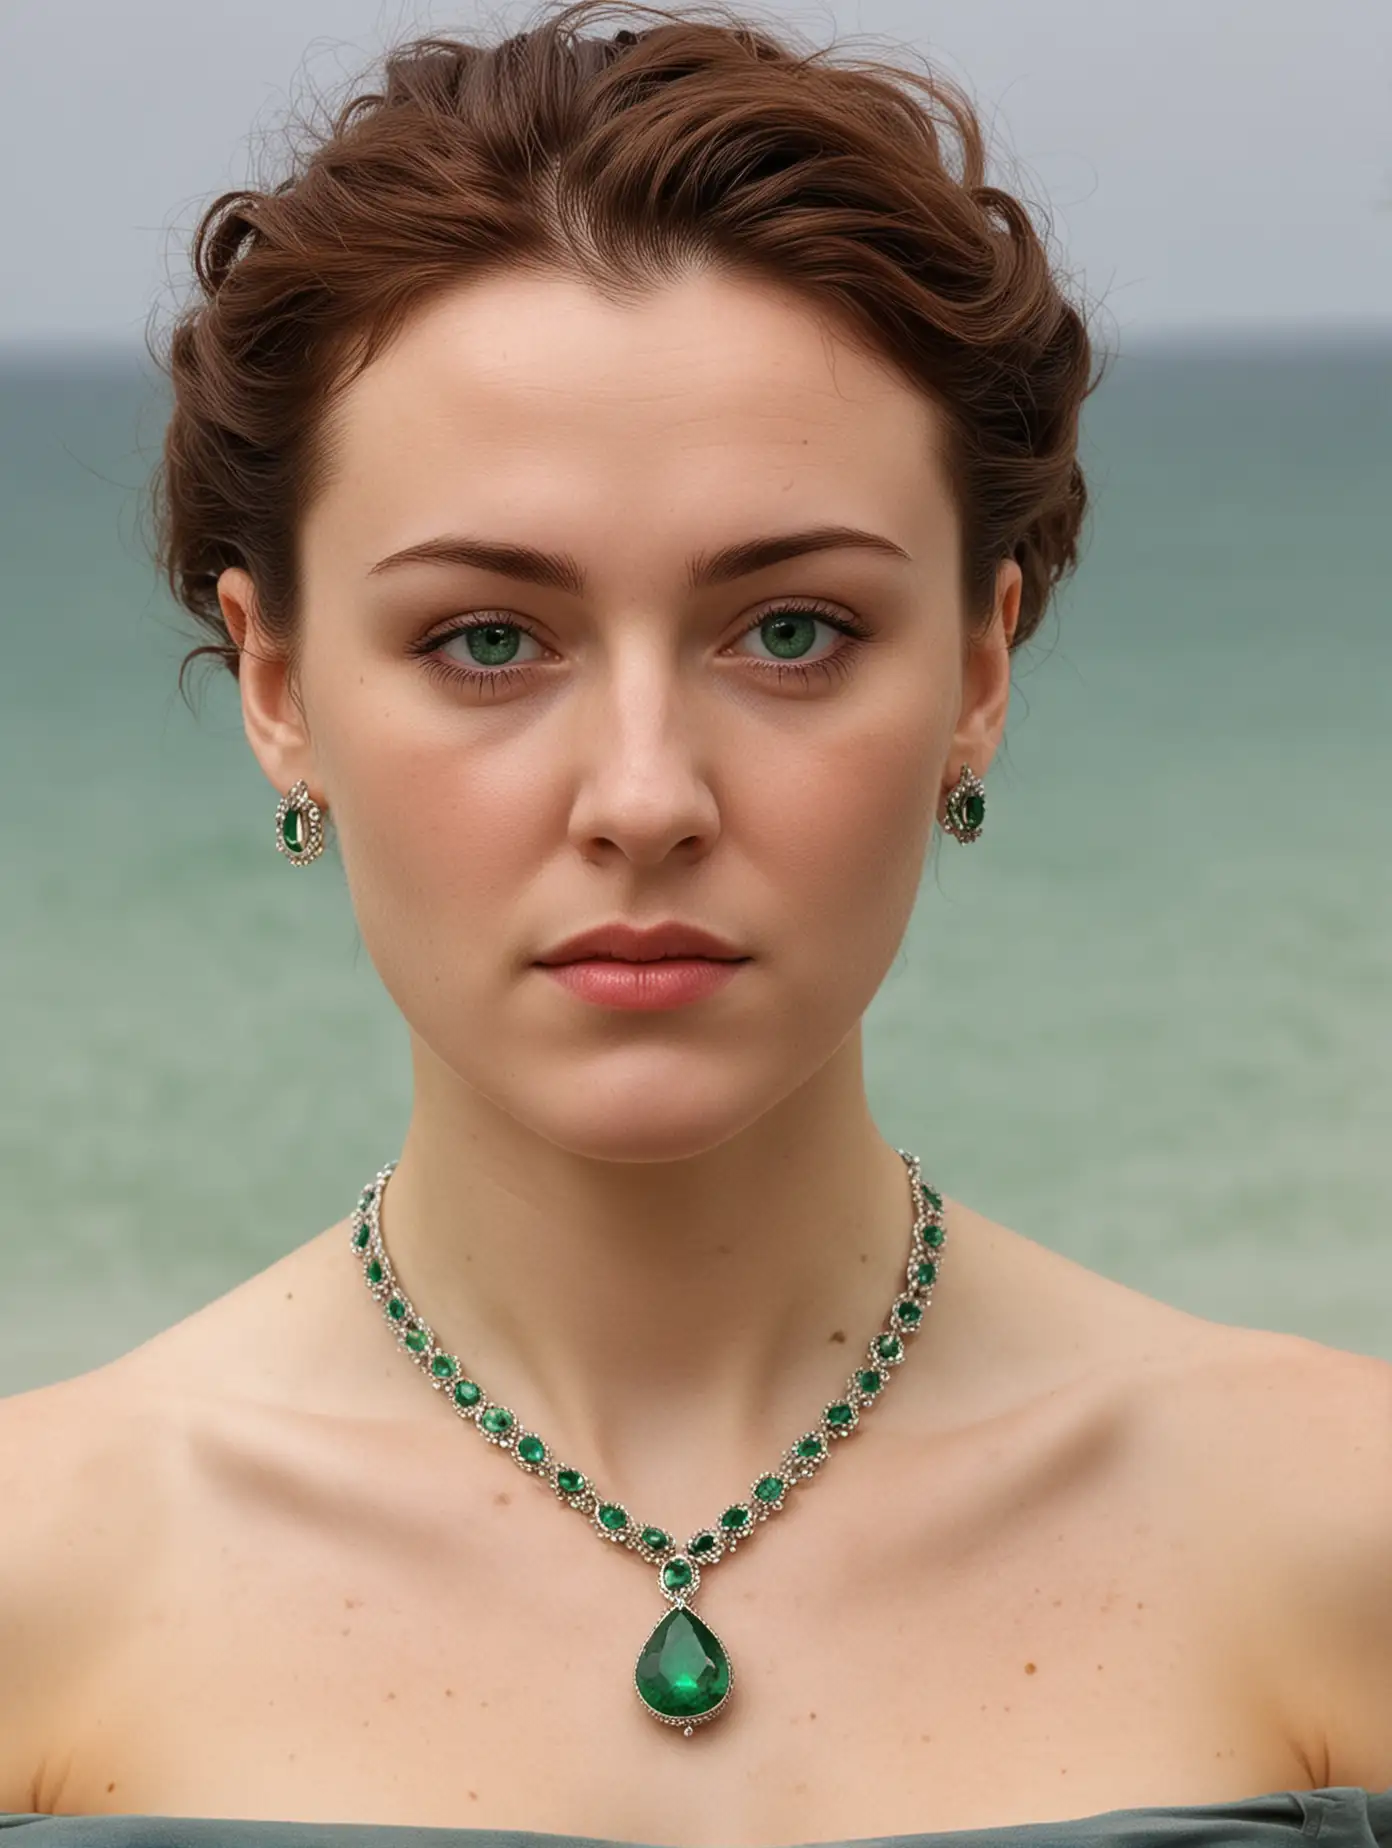 Irish Woman Wearing Stunning Emerald Necklace